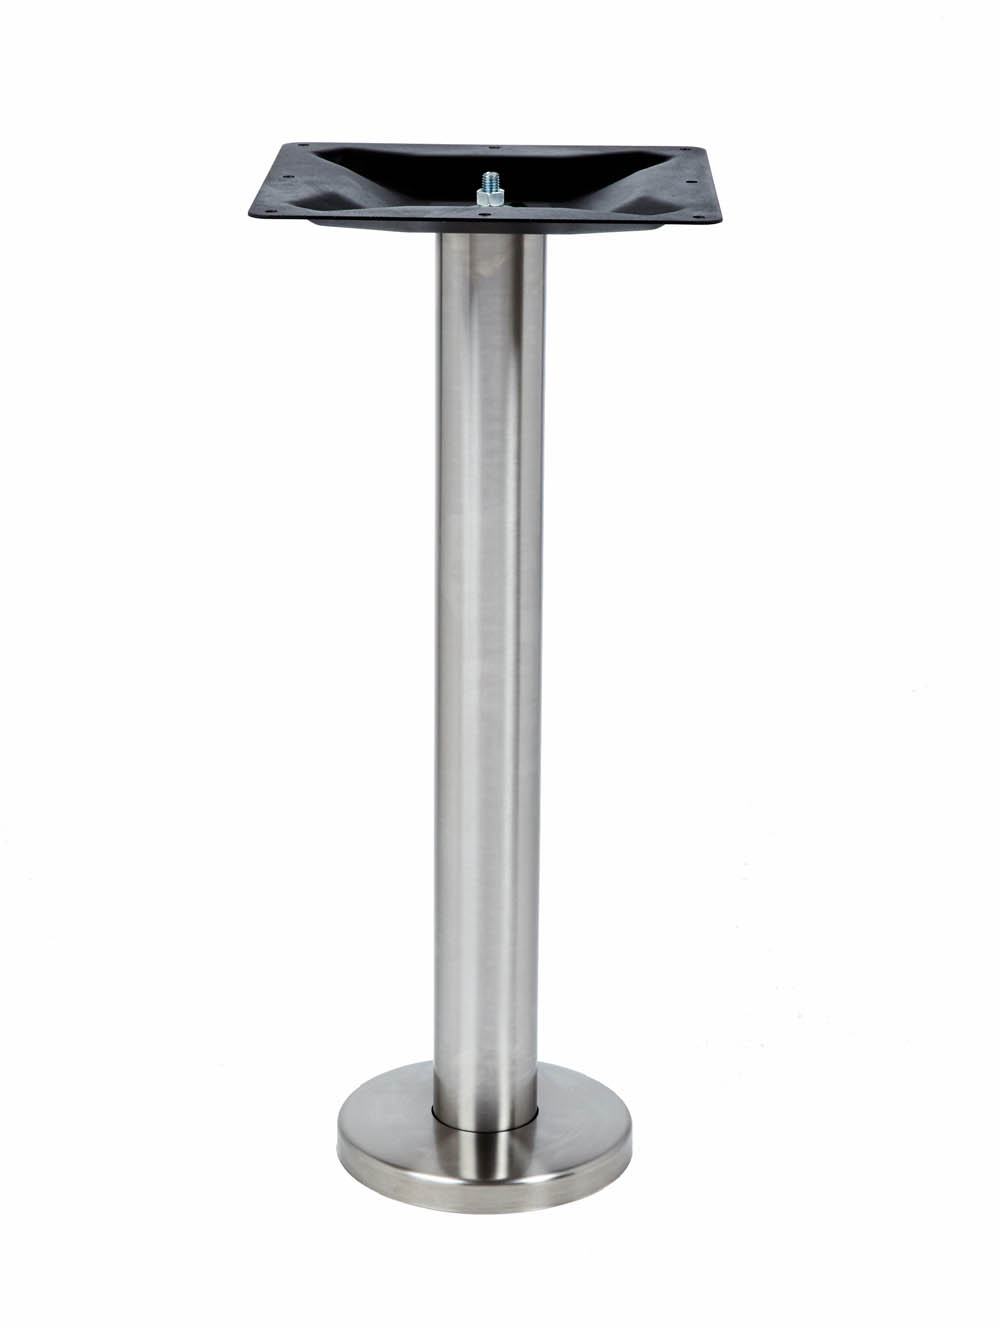 ROVER Floor Bolt Down Table Leg, BEST SELLER, 3″ Round Stainless Steel Column, Large Top Plate